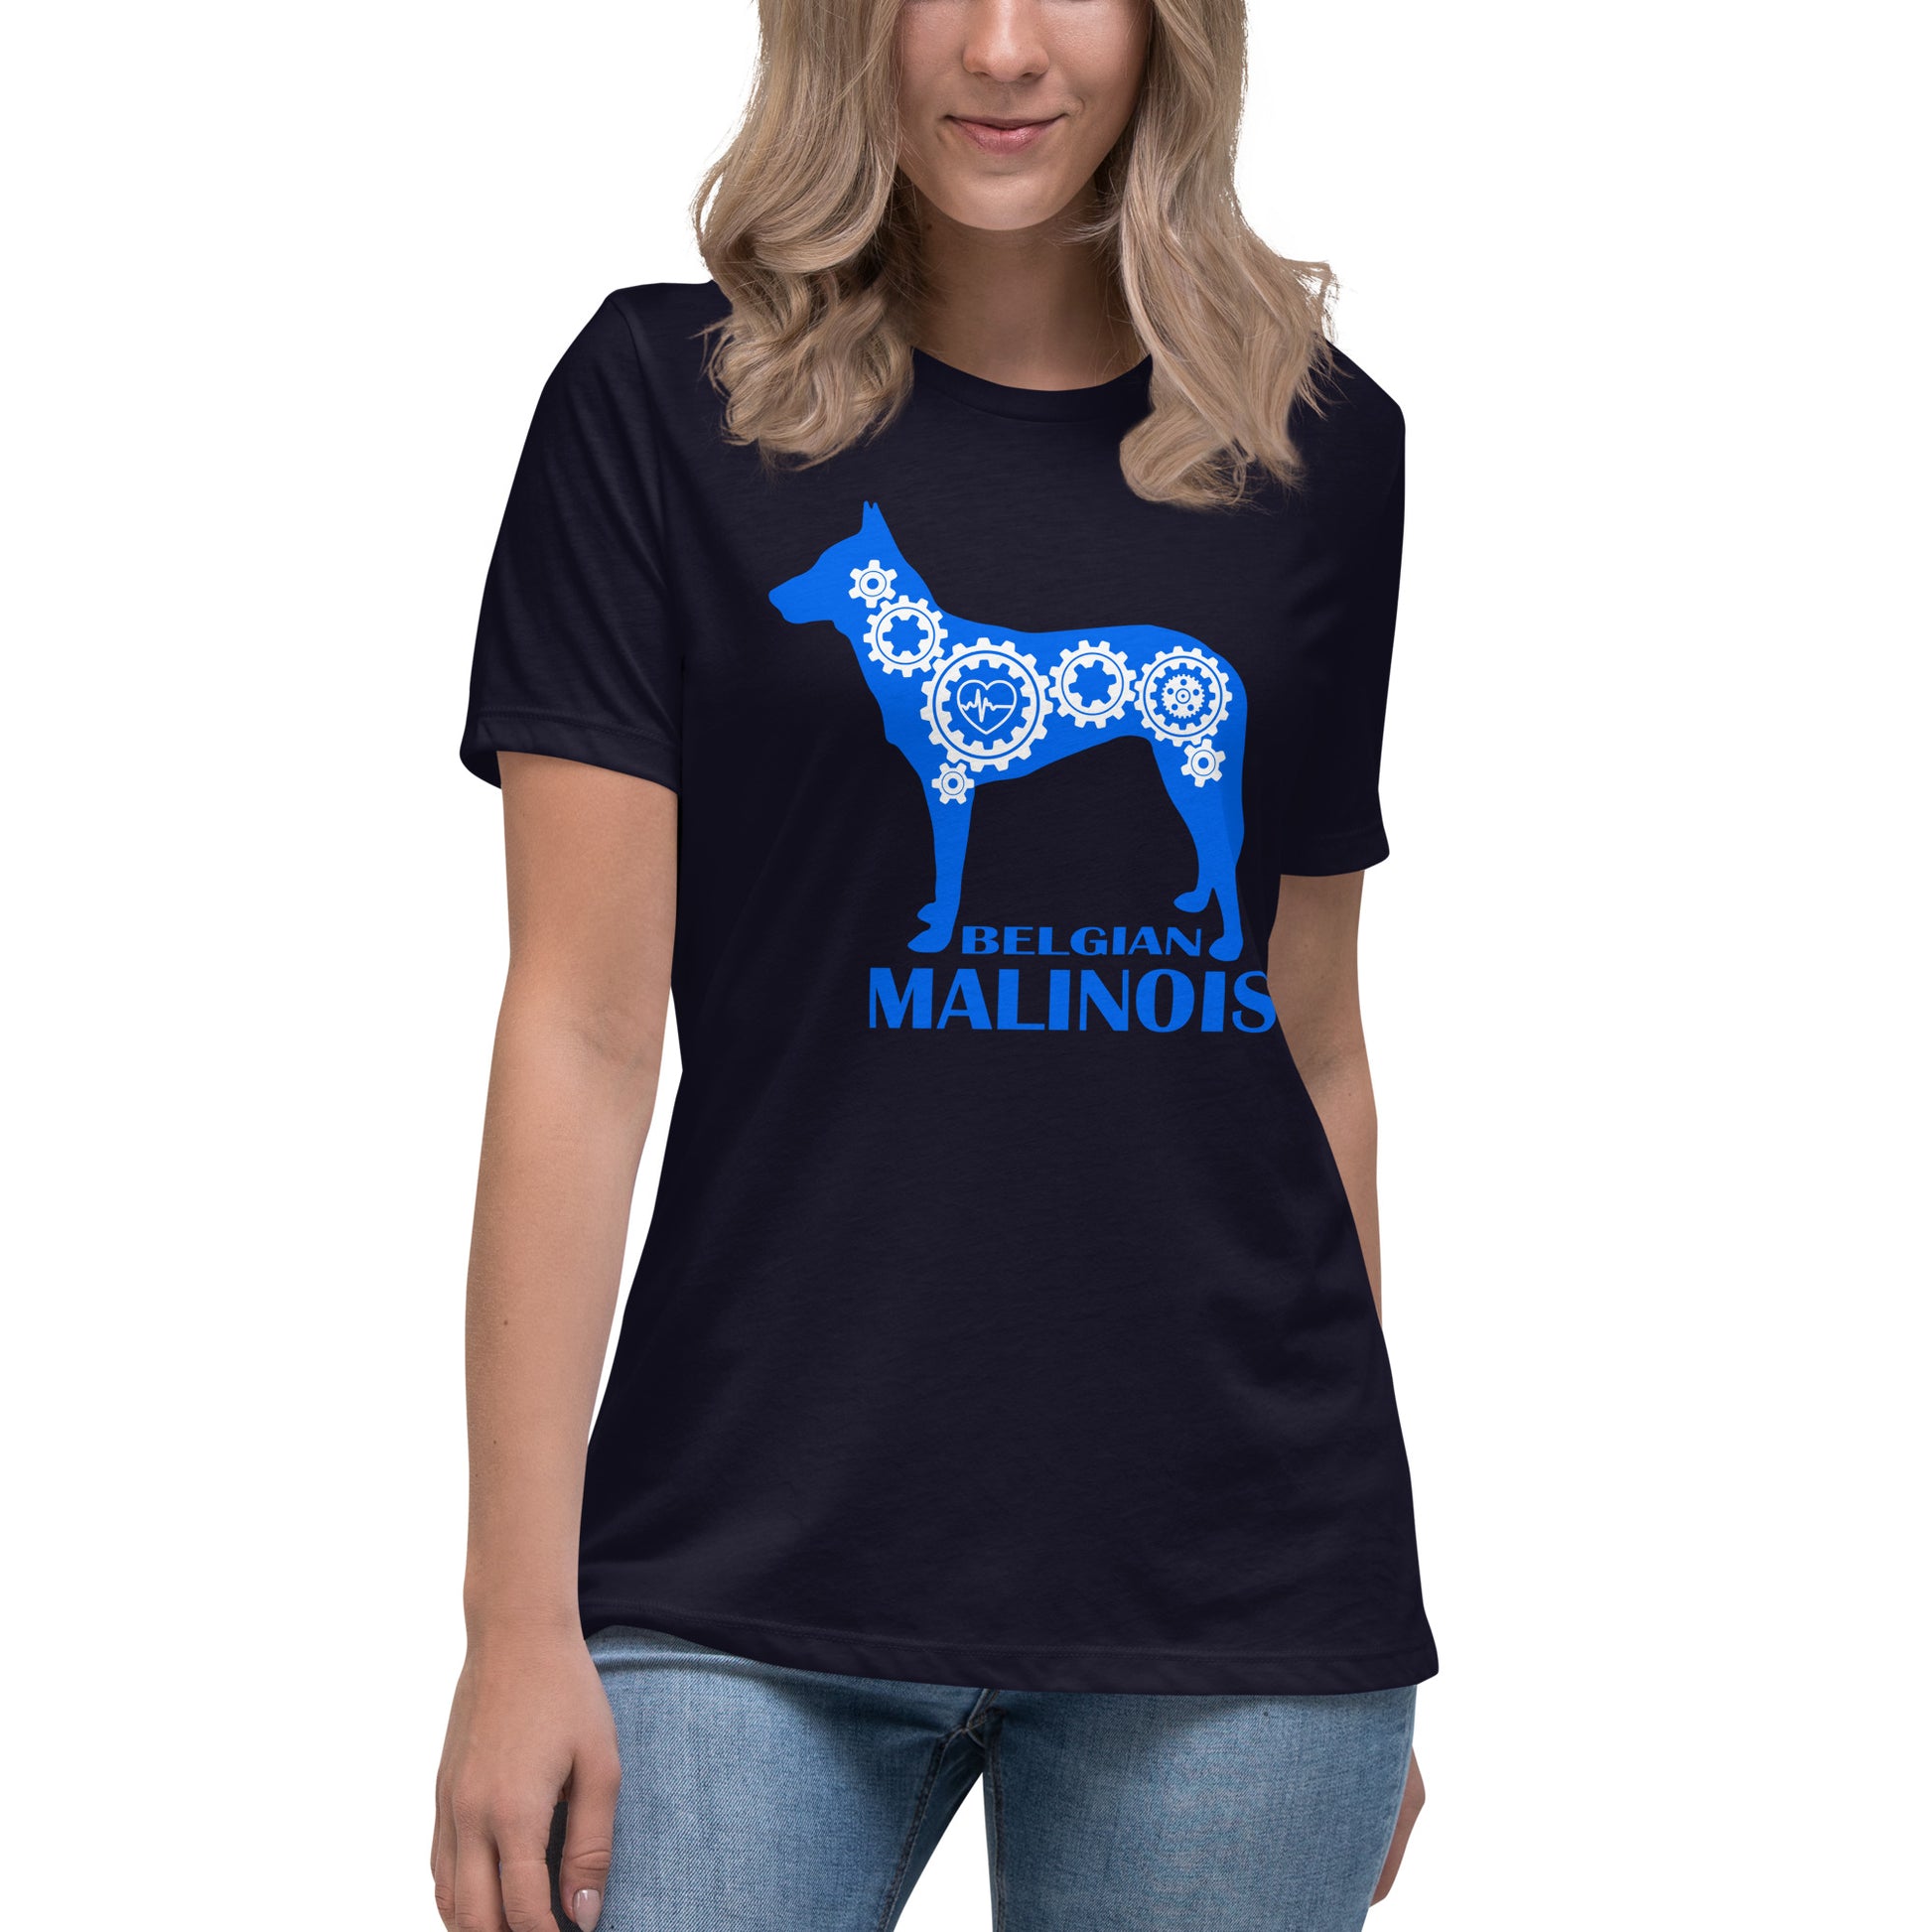 Belgian Malinois Bionic women’s navy t-shirt by Dog Artistry.